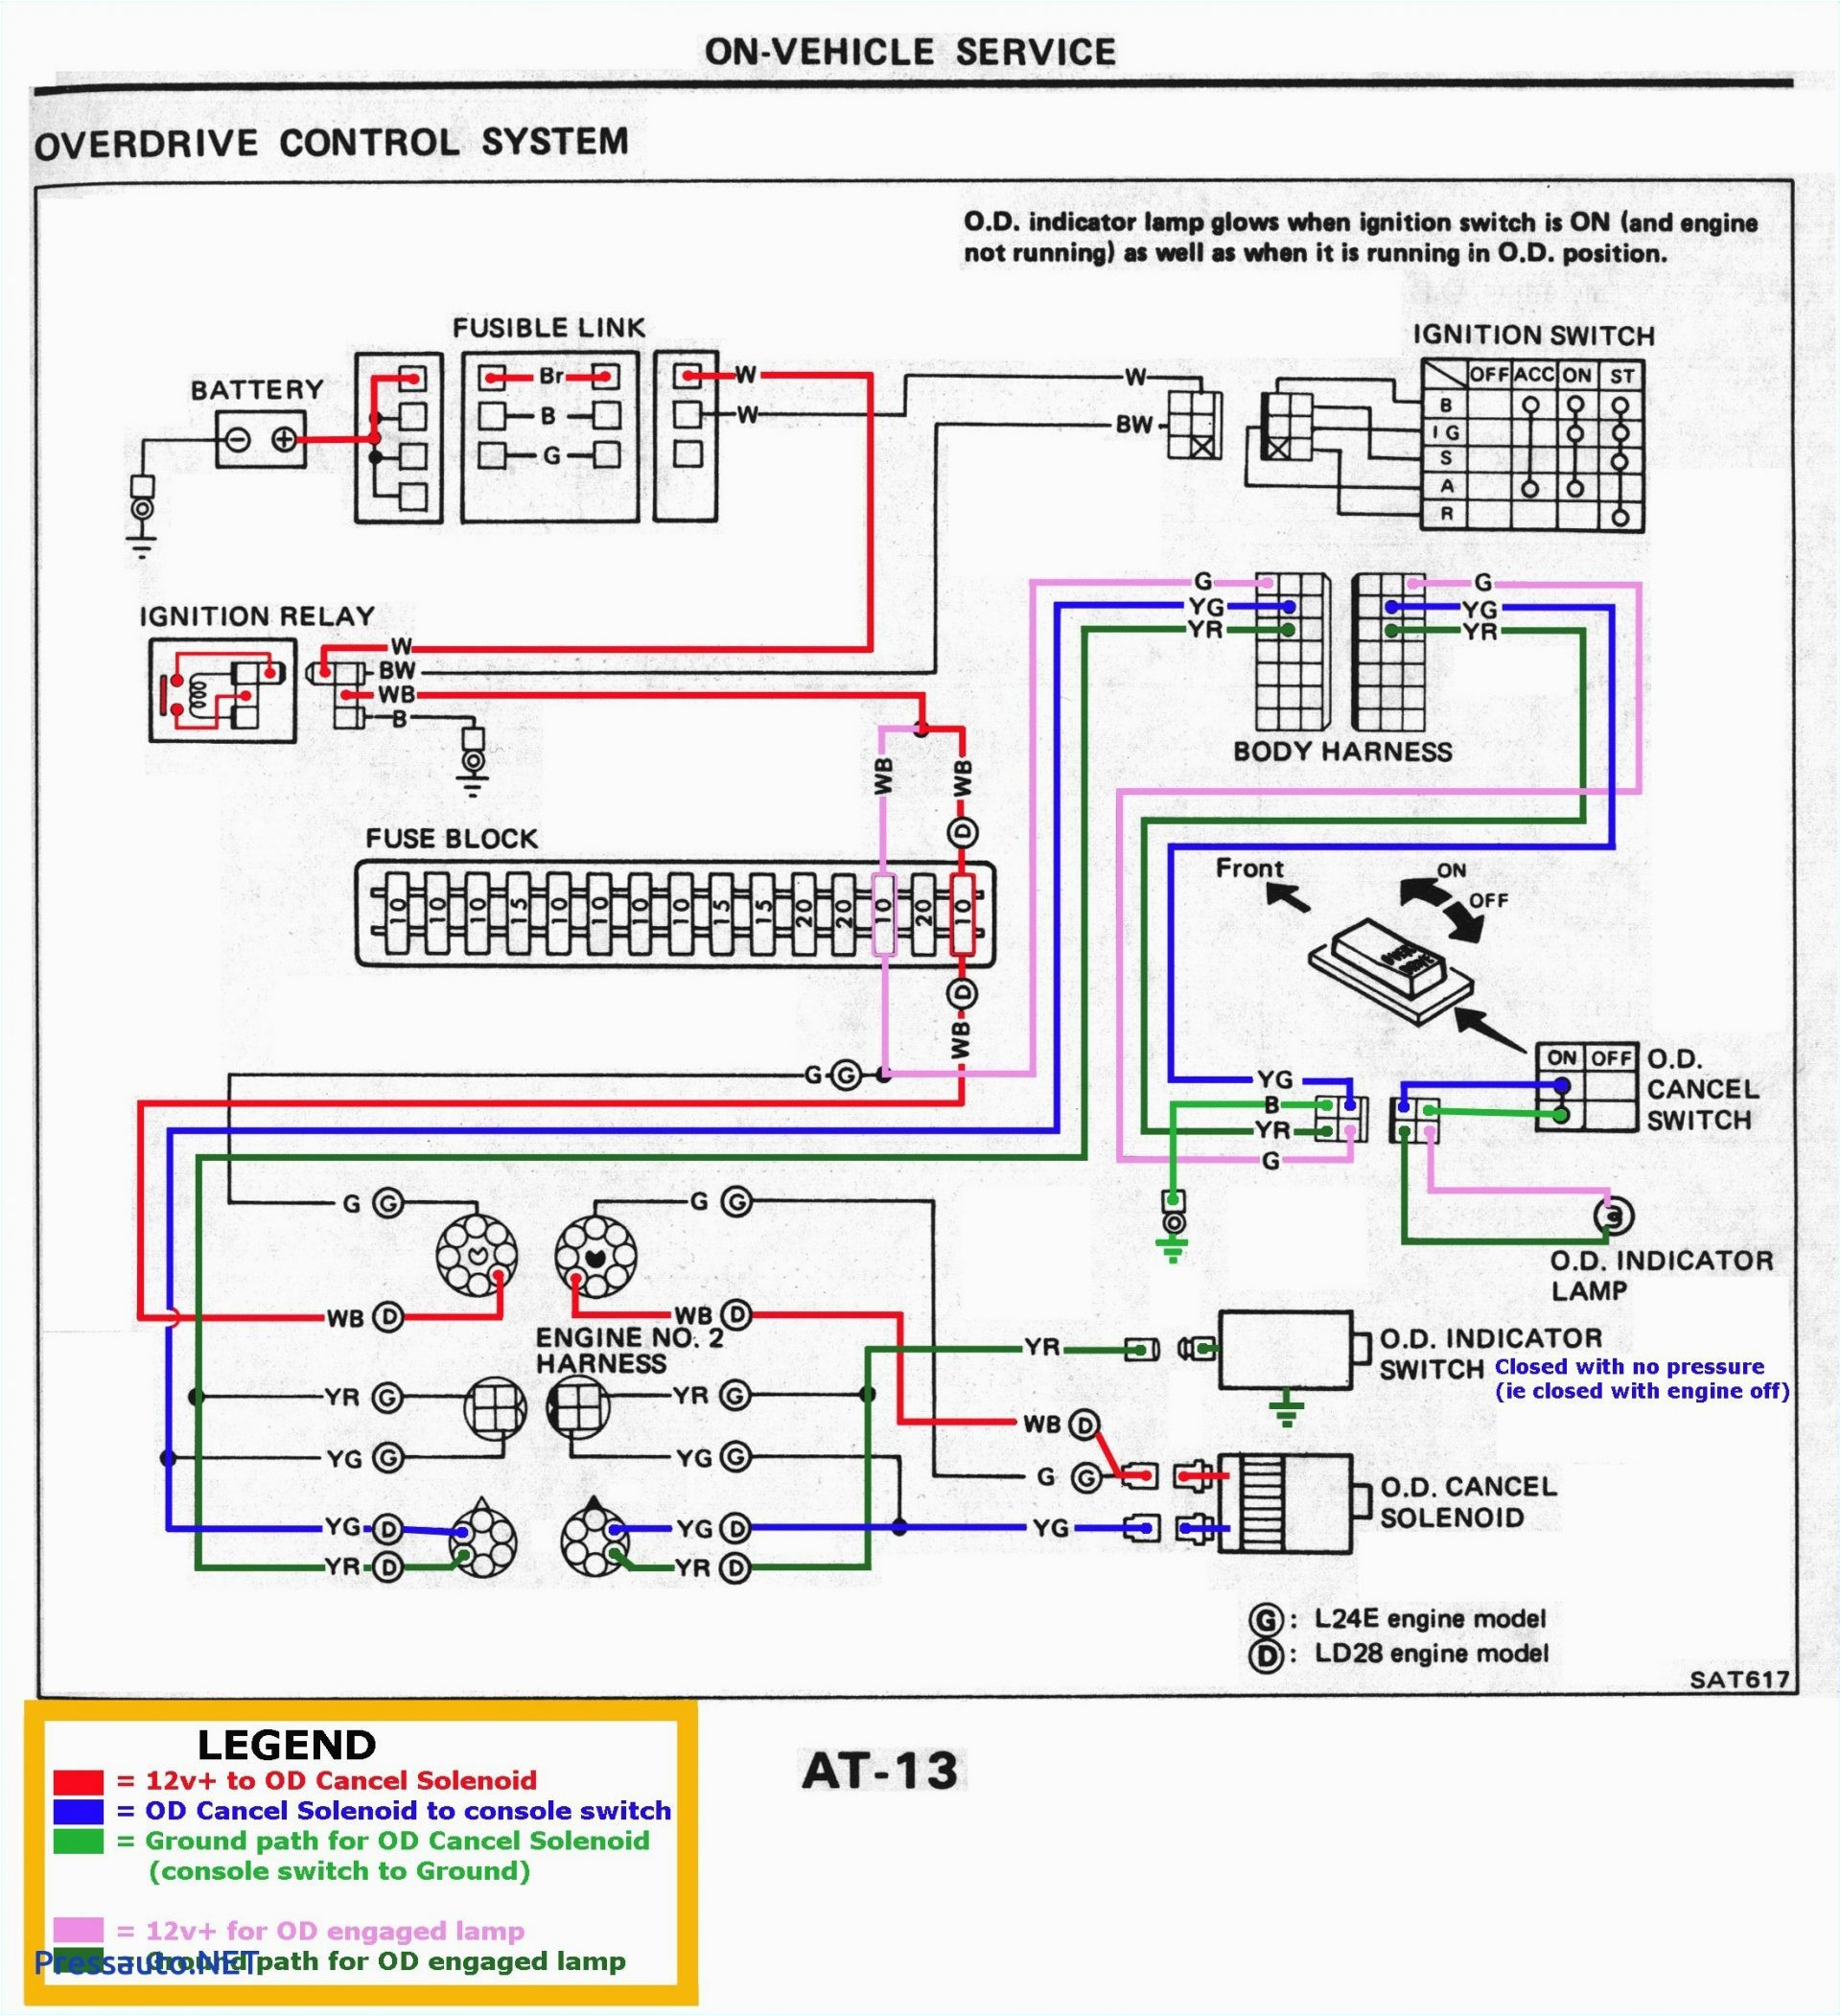 7 pin ignition module wiring diagram lovely 7 pin ignition module wiring diagram simplified shapes trailer